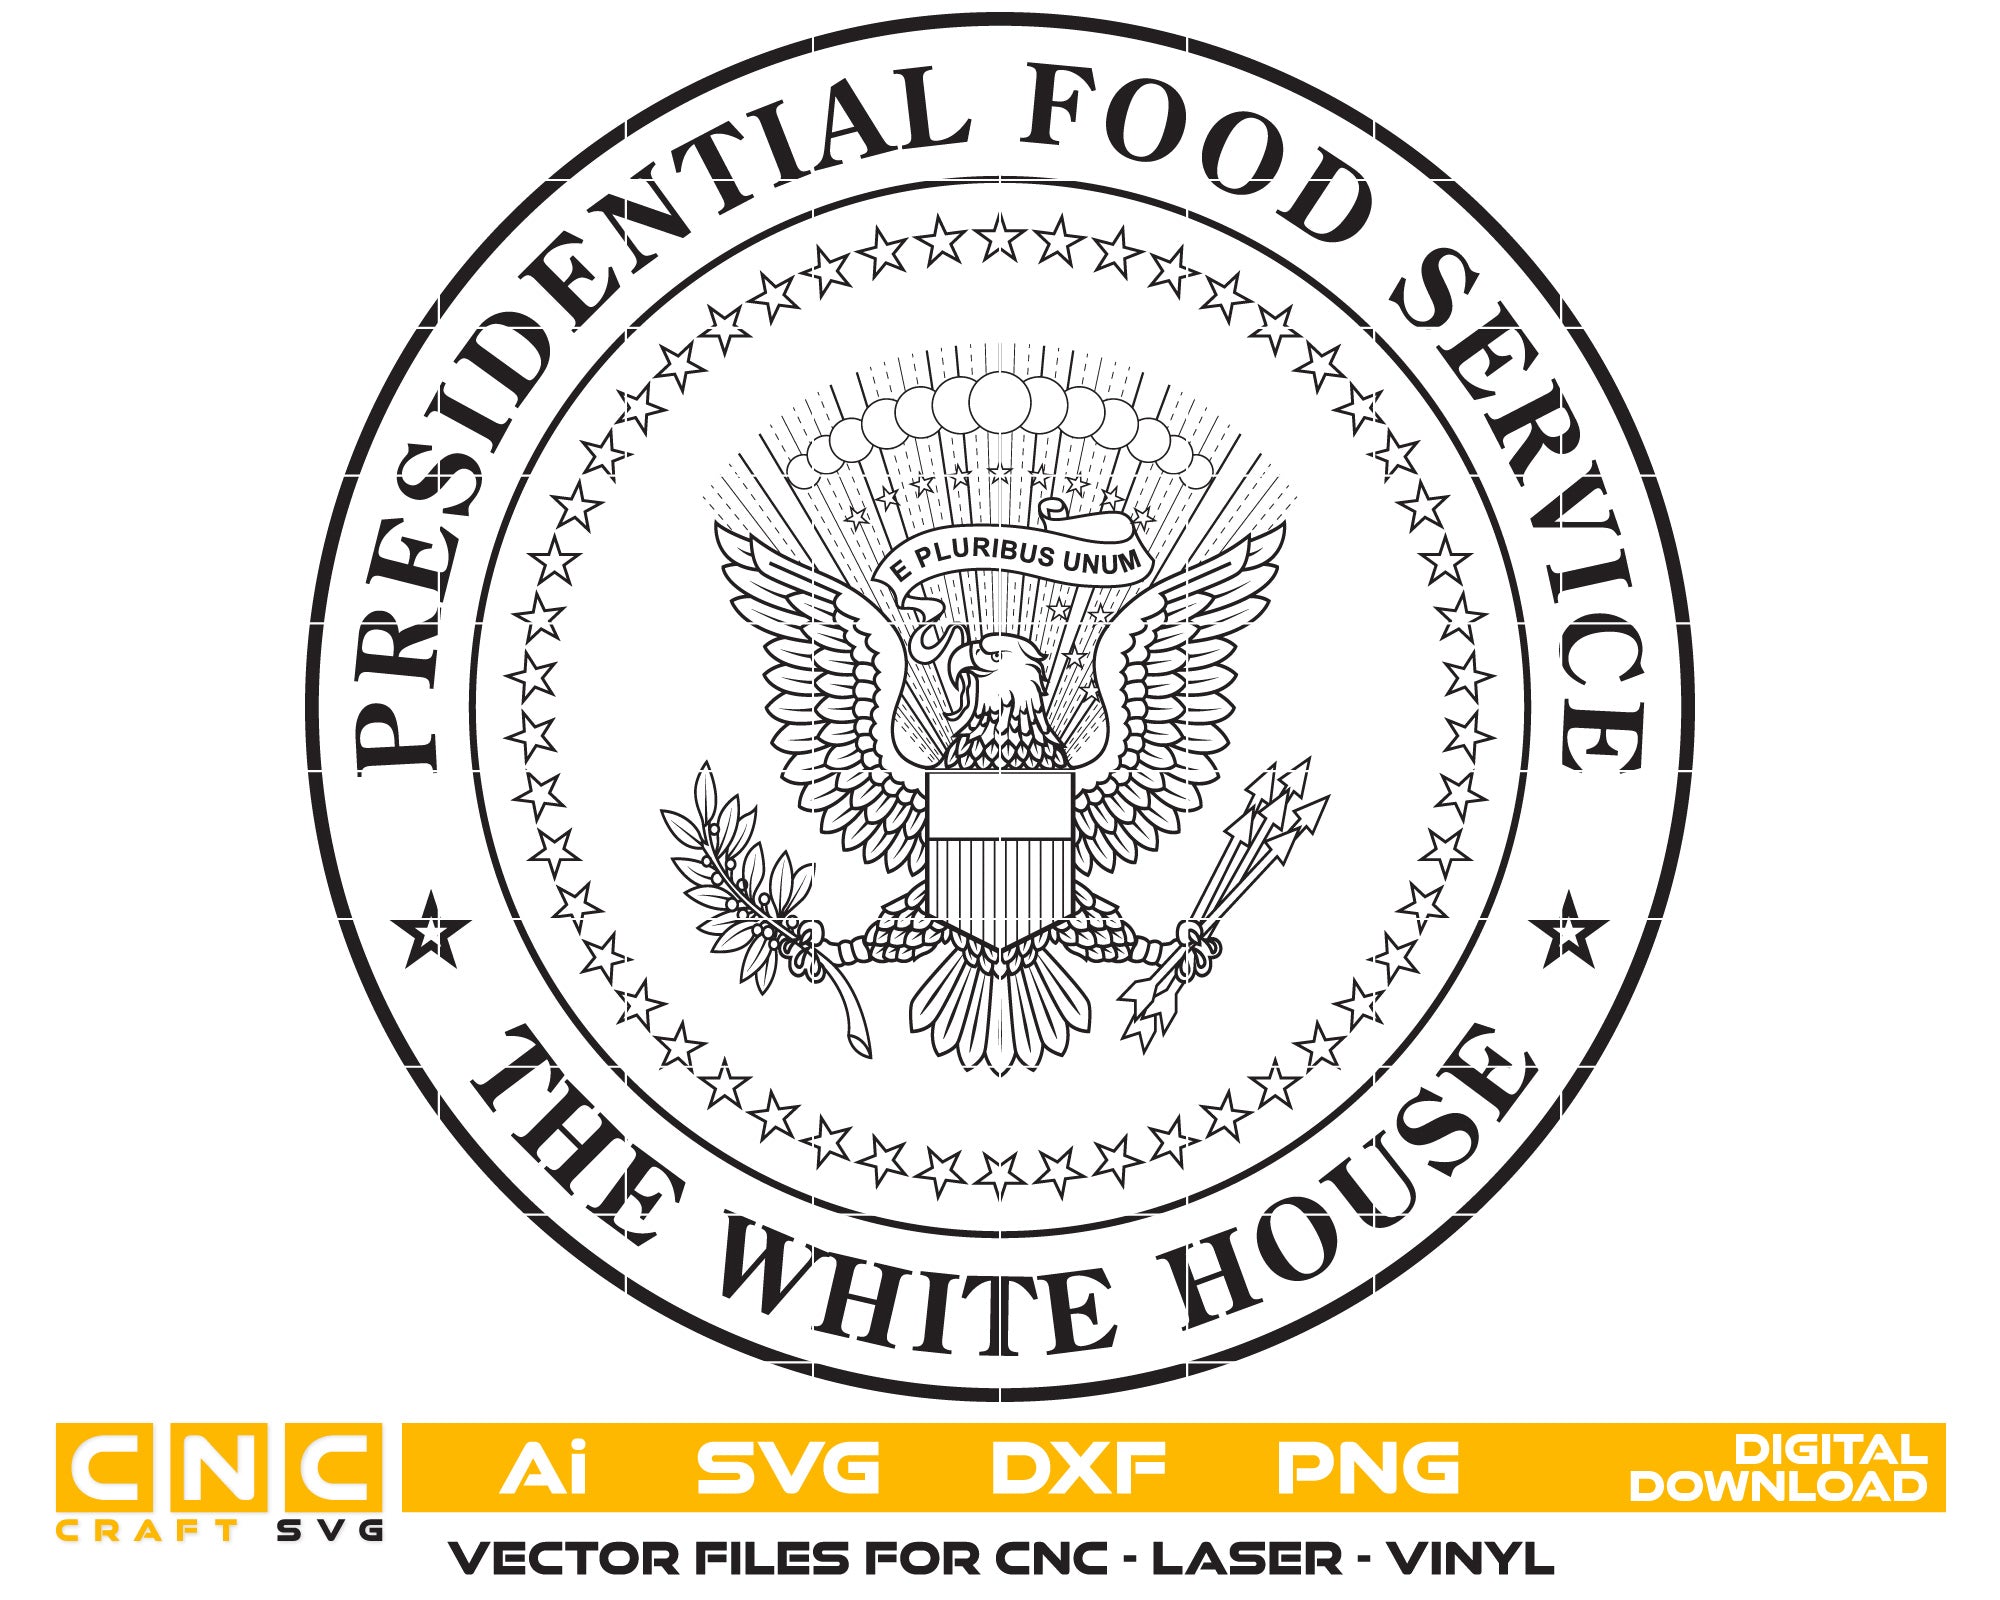 Presidential Food Service Logo Vector Art, Ai,SVG, DXF, PNG, Digital Files